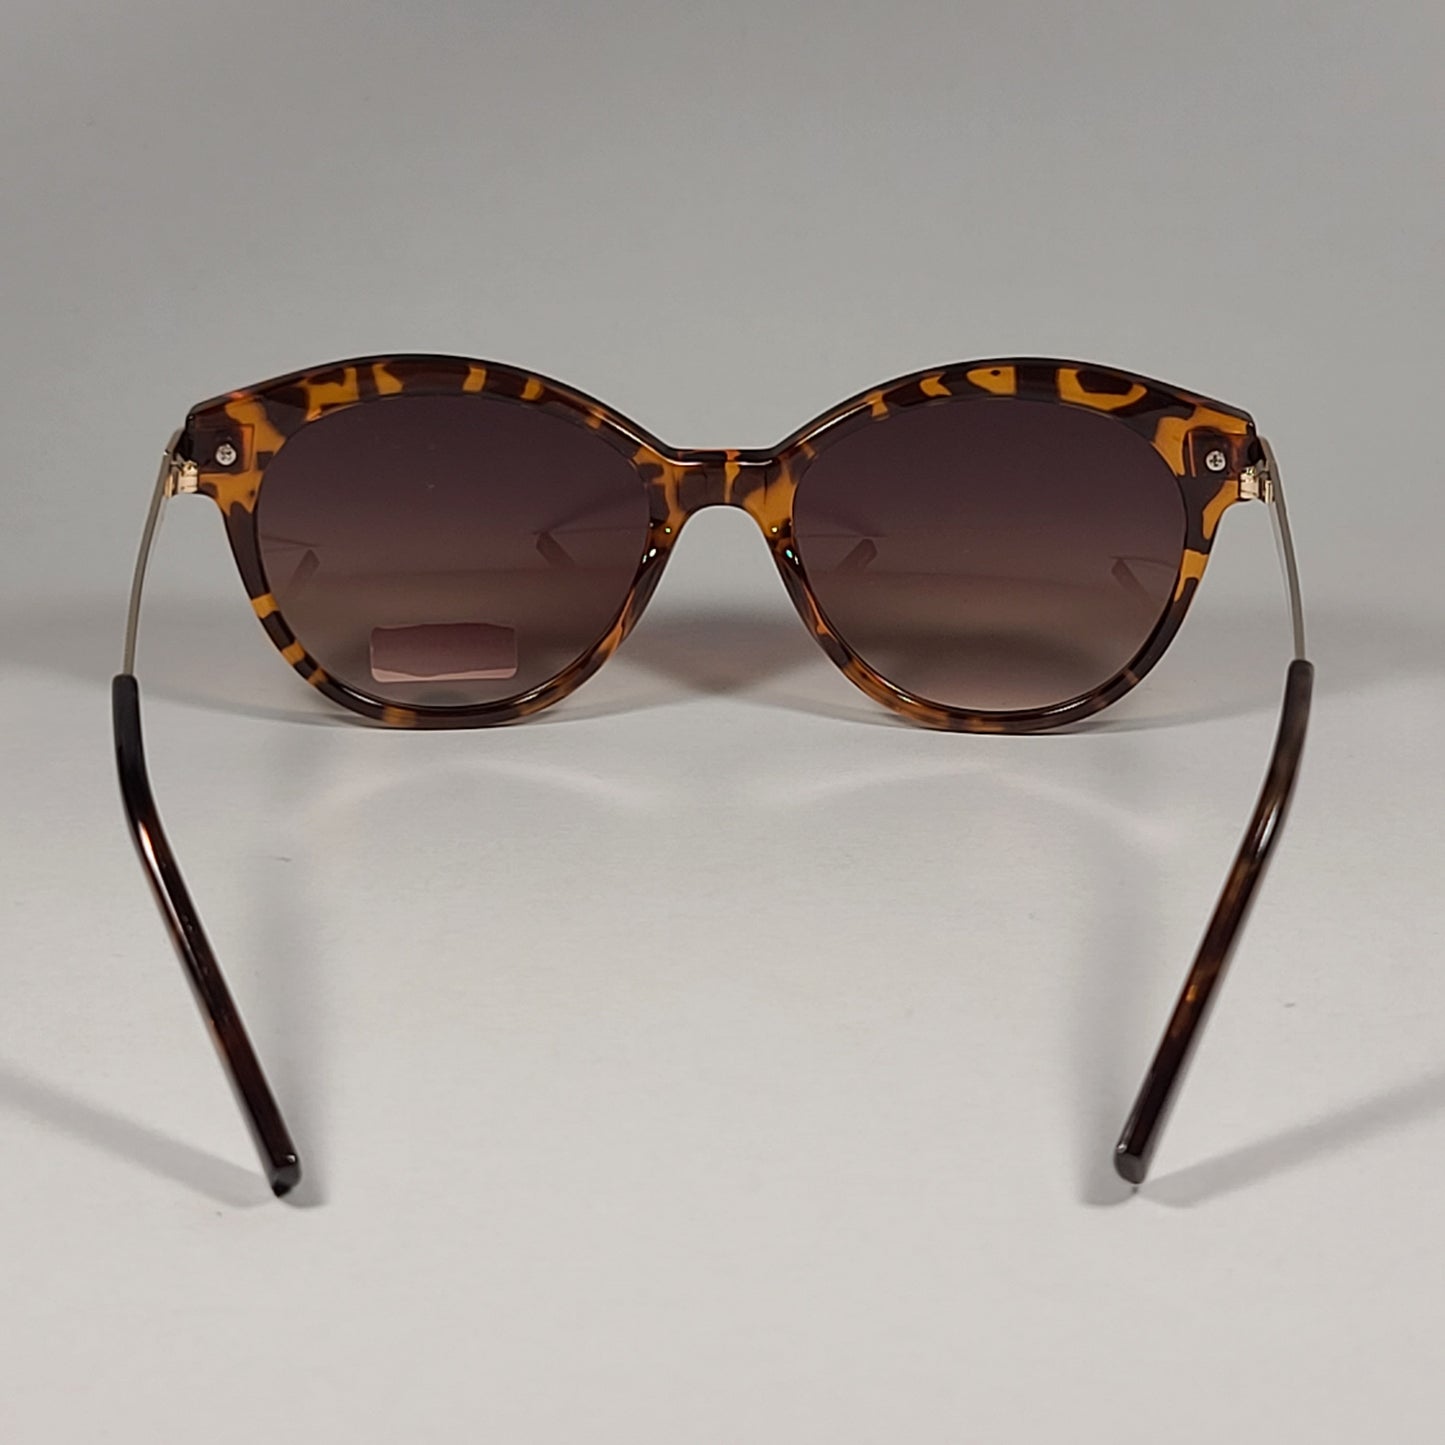 Tommy Hilfiger Kourtney WP OL462 Sunglasses Brown Tortoise Gold Brown Gradient - Sunglasses